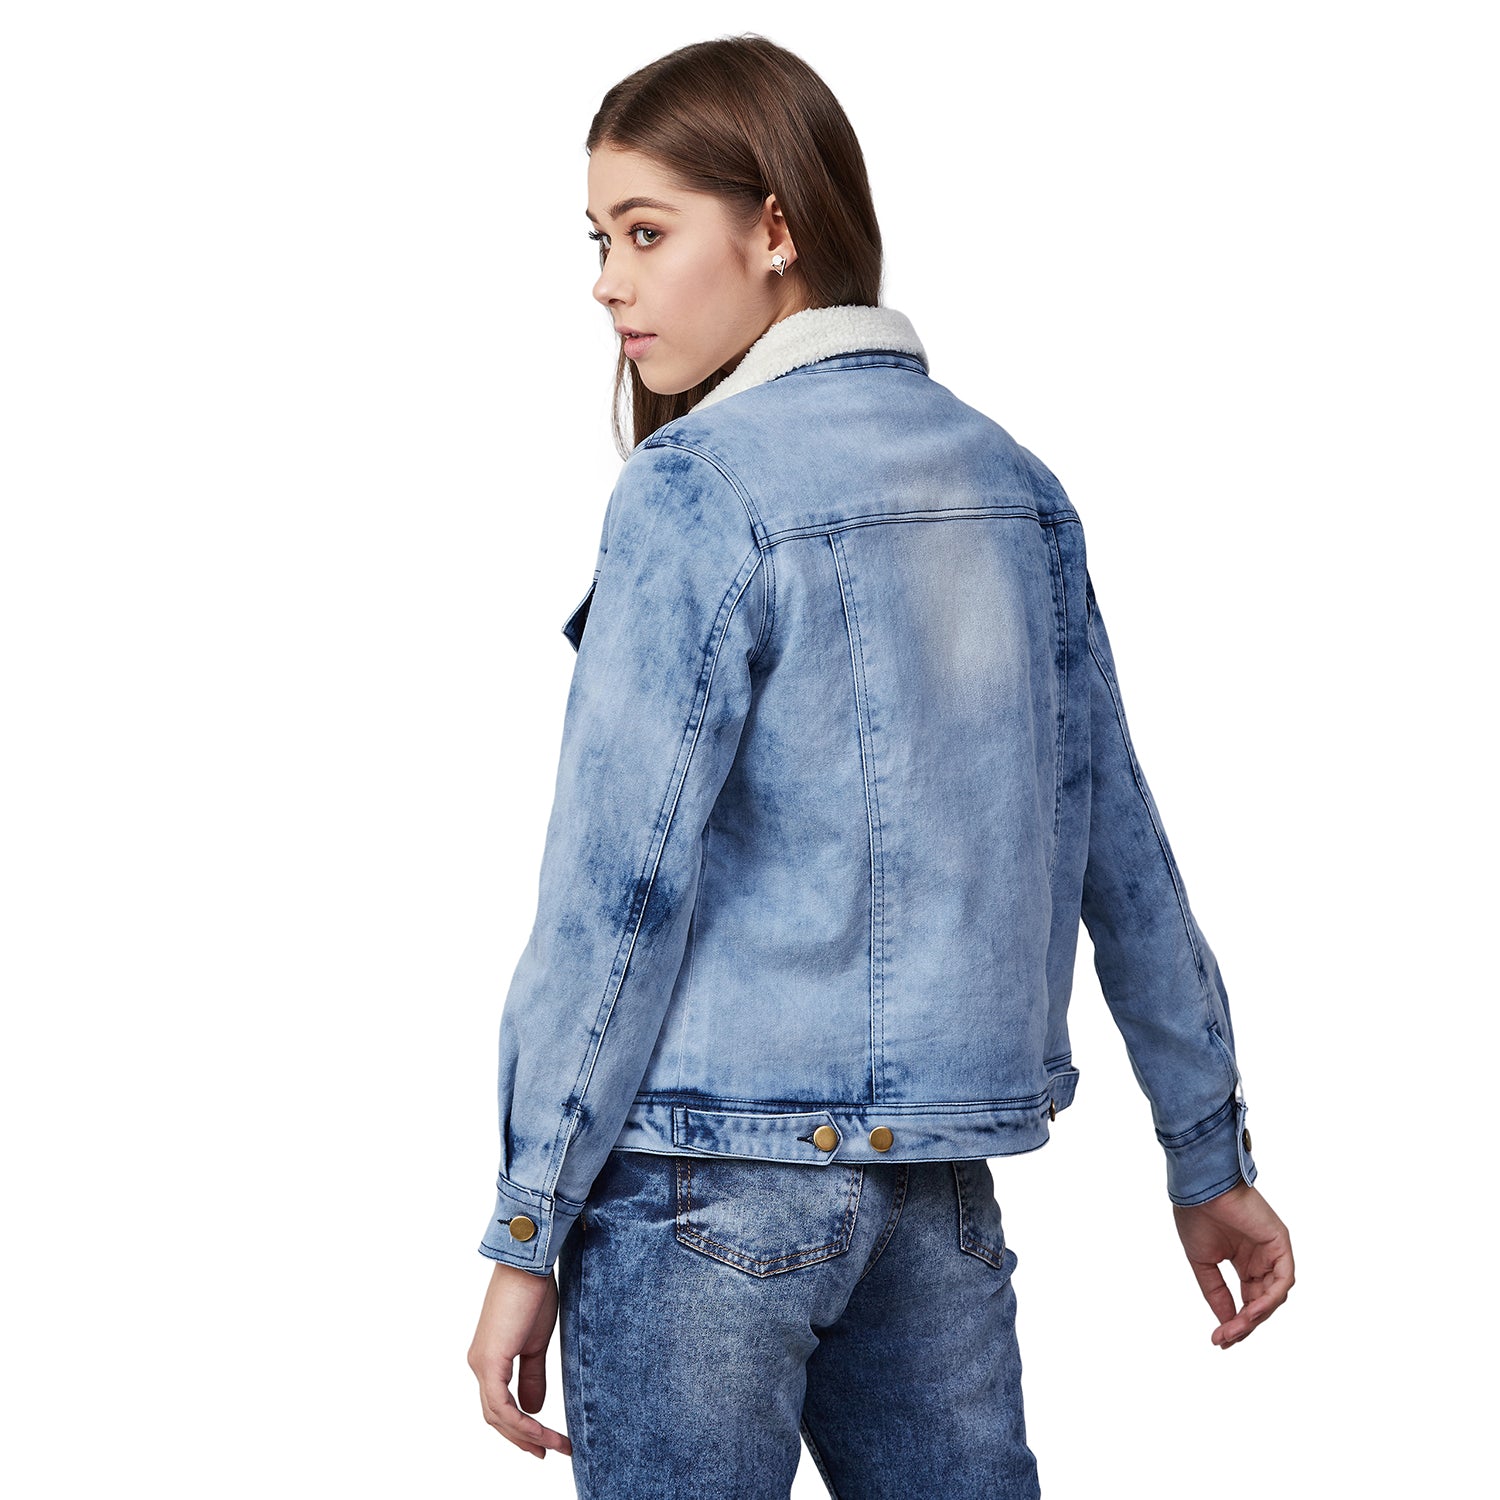 Women's Denim Jacket with Soft Warm Faux Fur Lining inside - Ice Blue - StyleStone